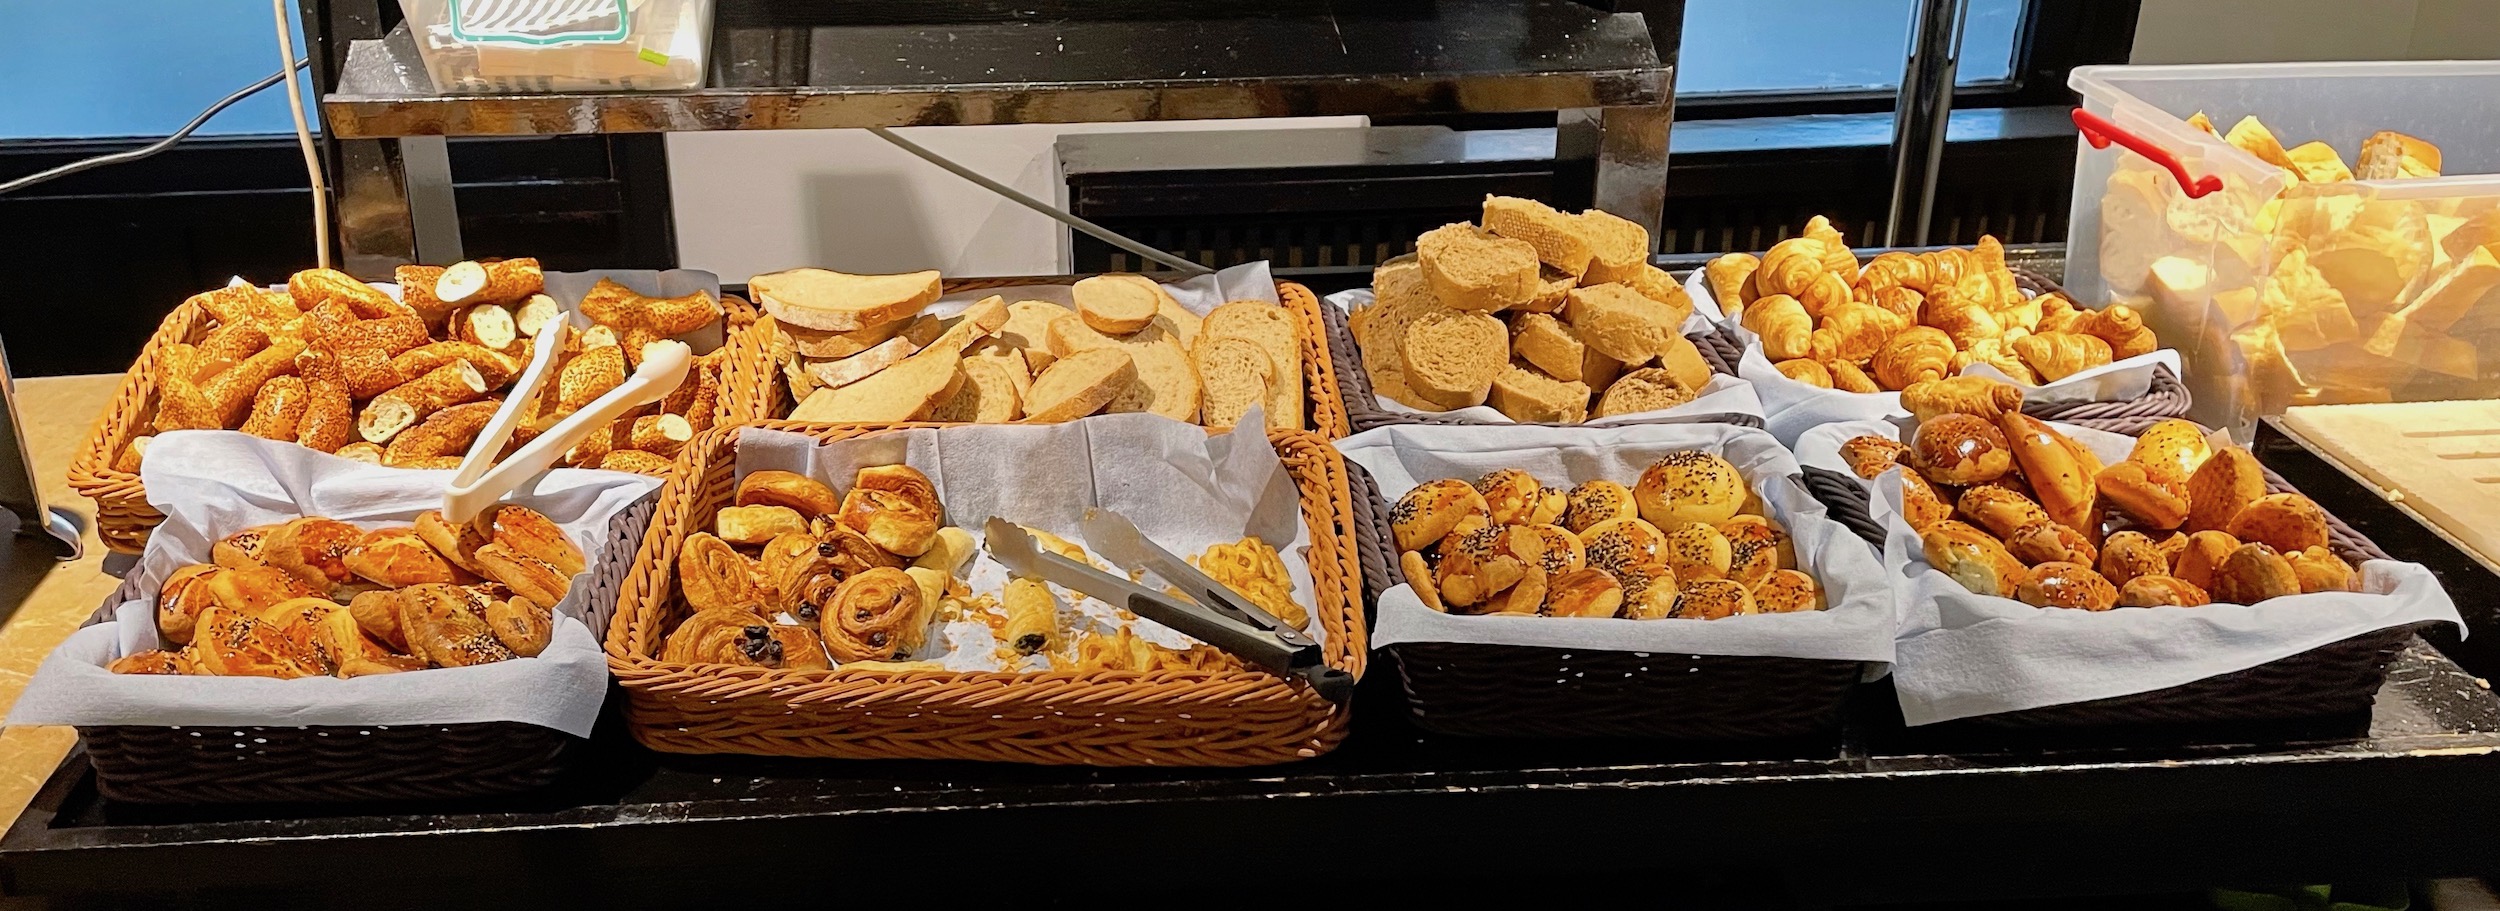 Breakfast Breads, Manastir Hotel, Bodrum